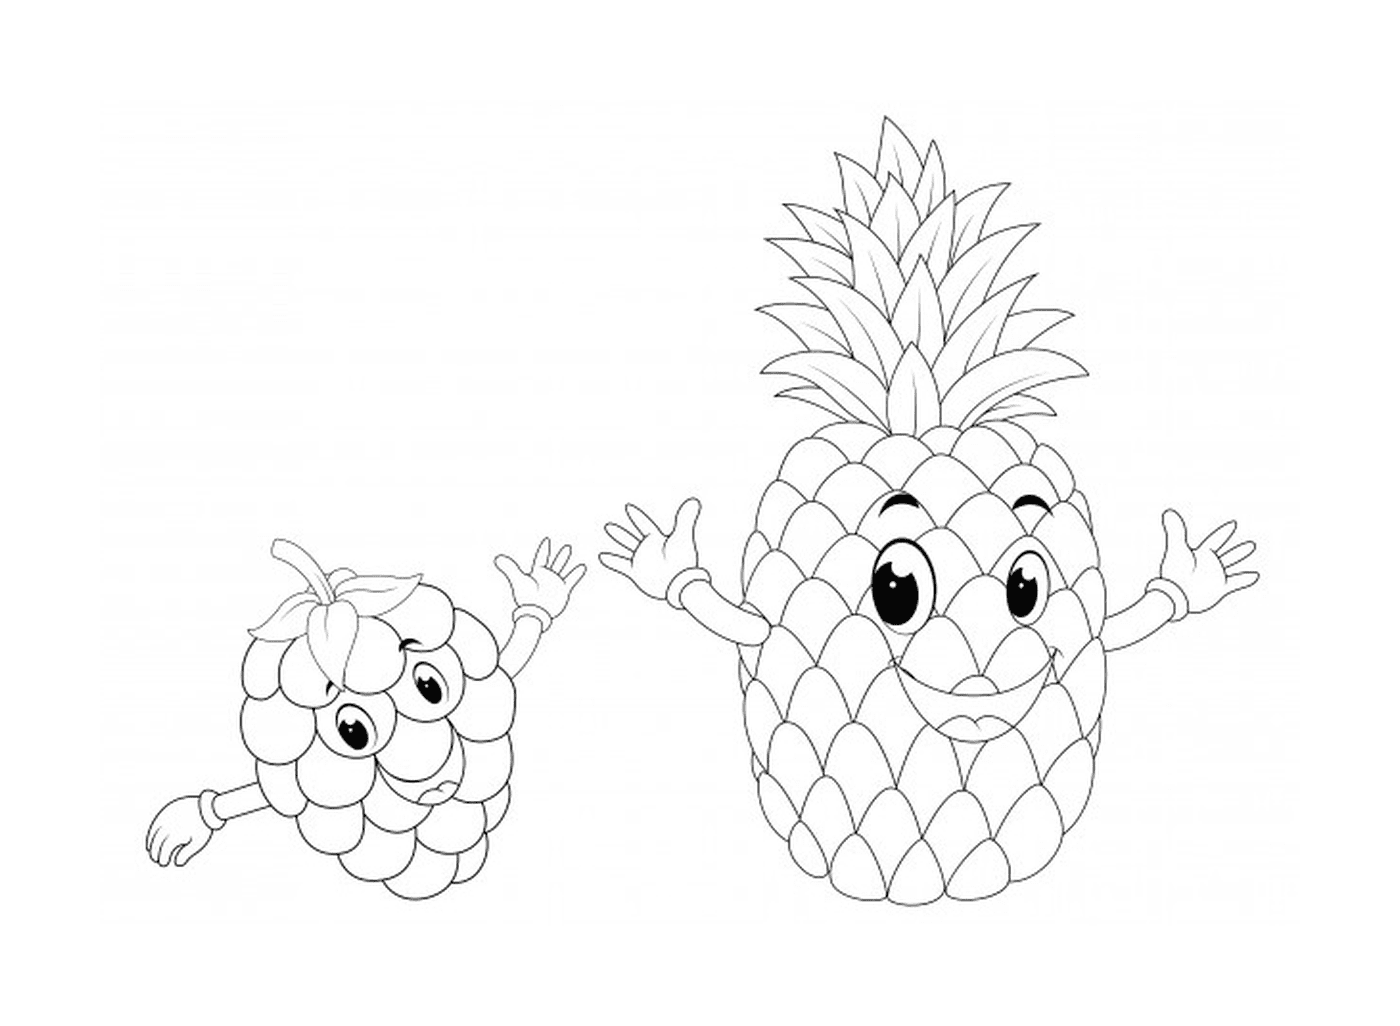  Ananas und Himbeere 